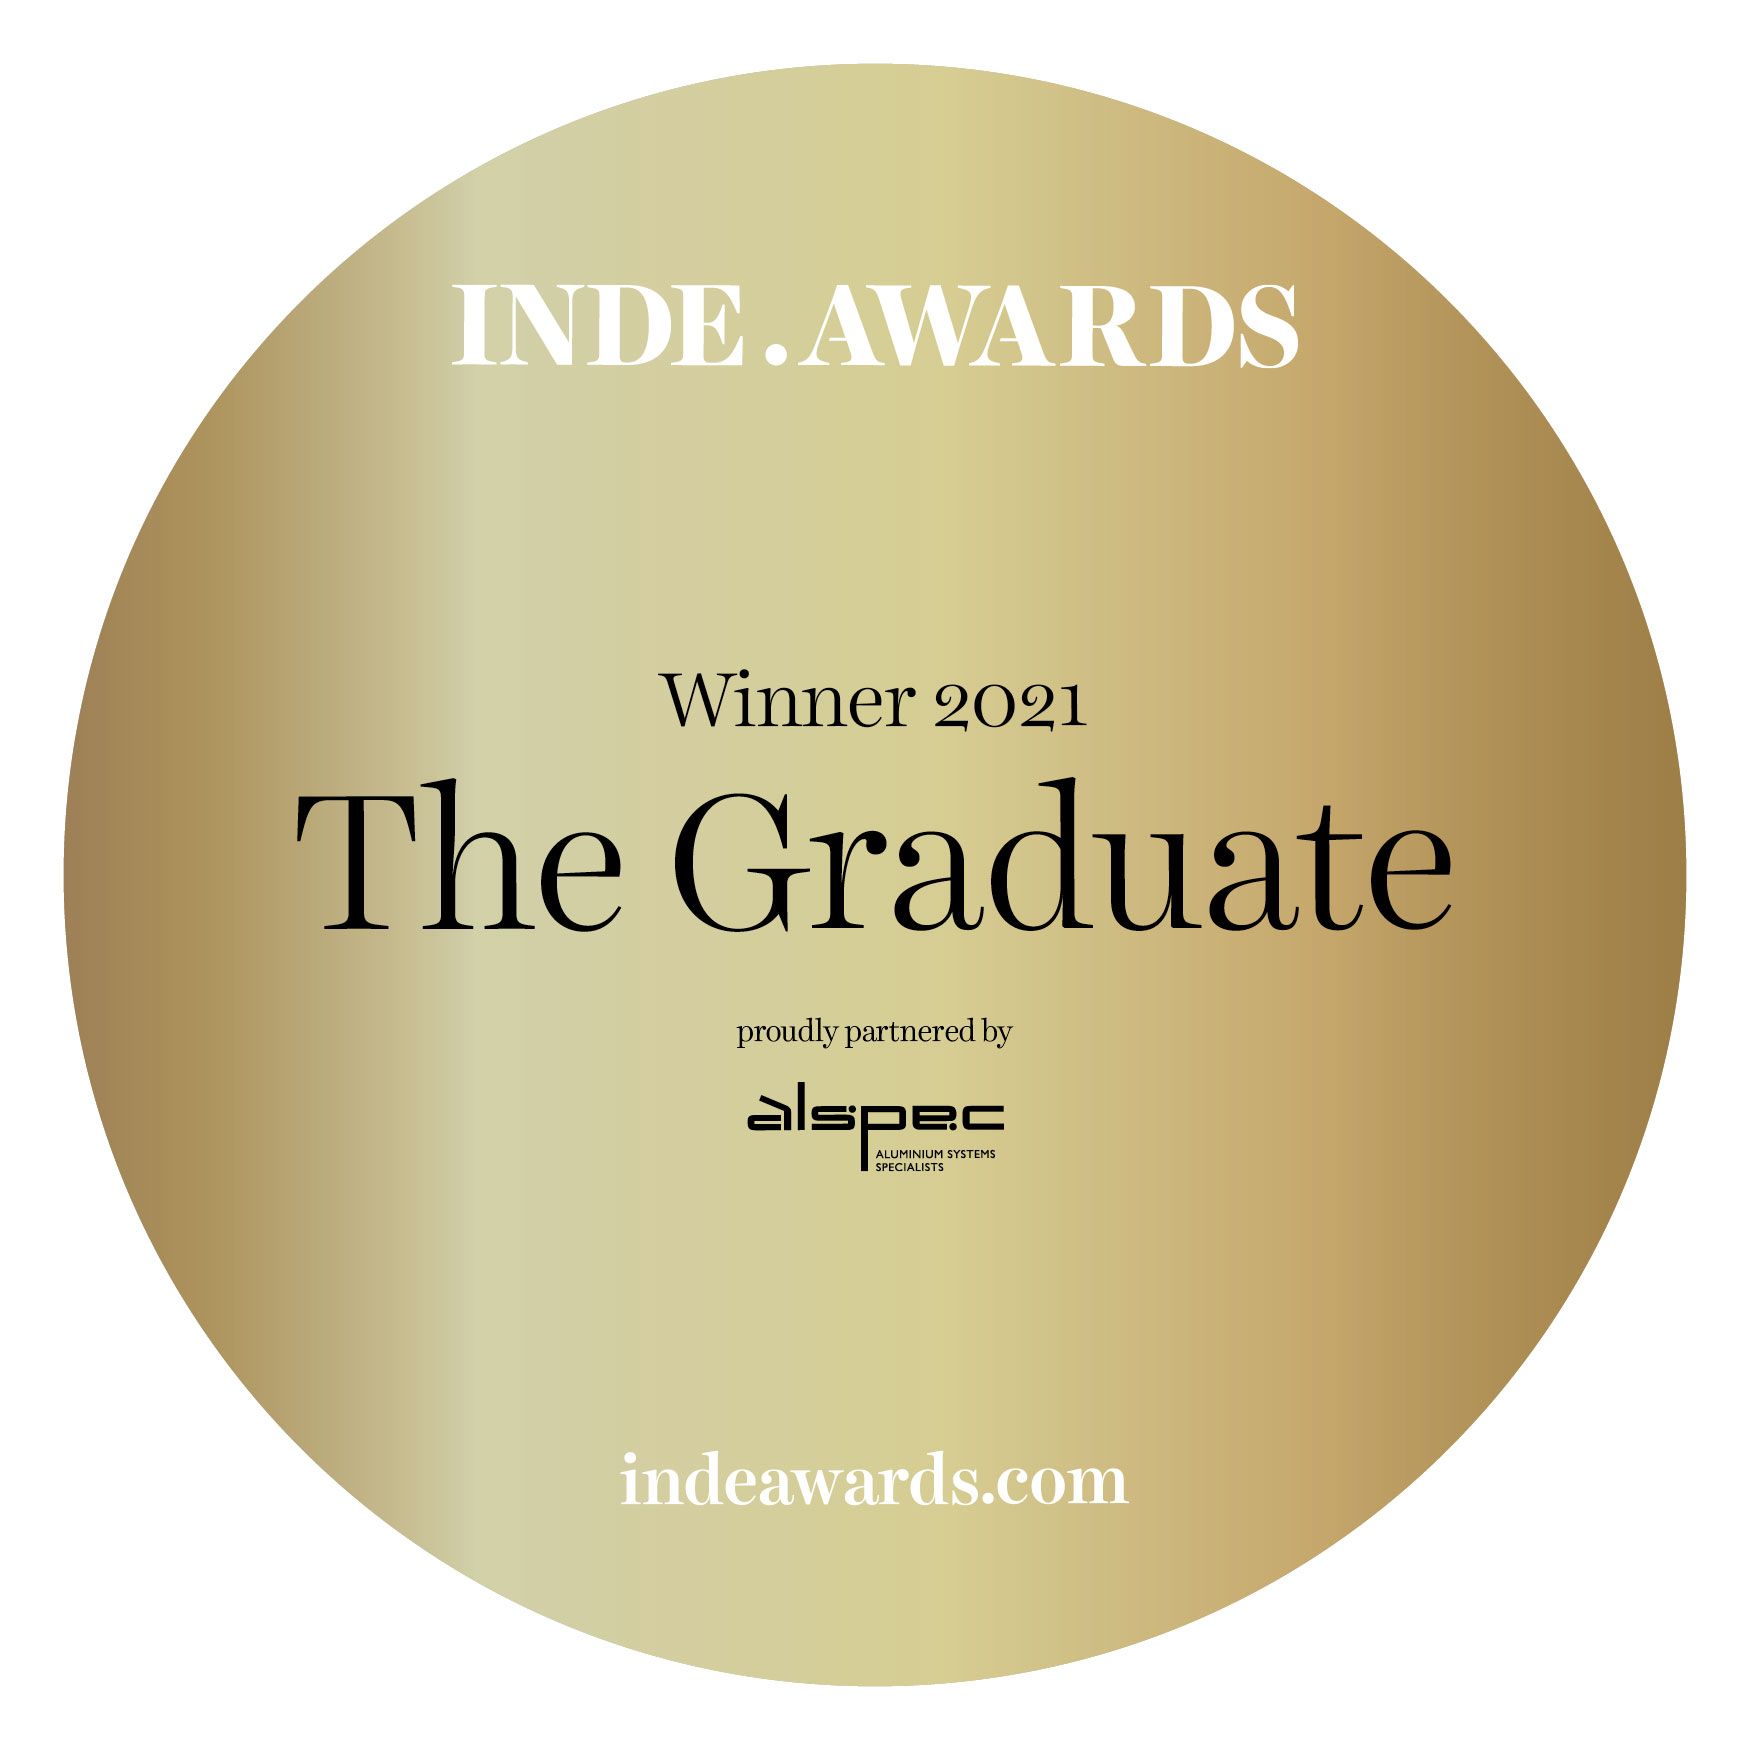 IMDE Awards 2021 Winner The Graduate